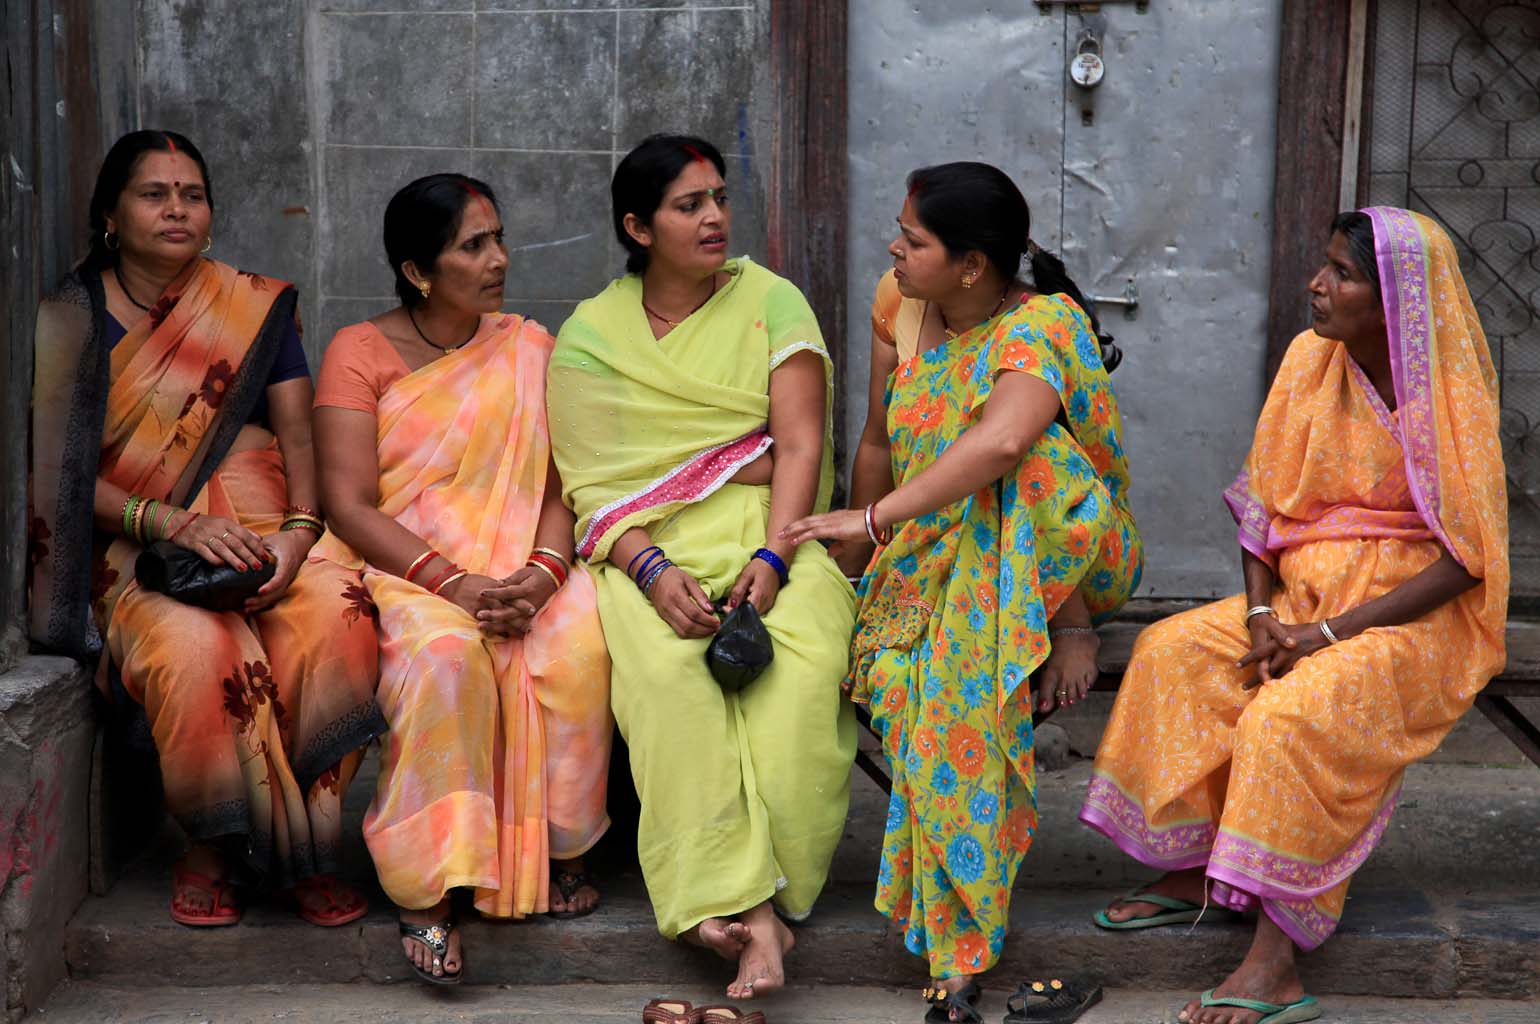 https://matteovegetti.com/wp-content/gallery/indias/043-matteo-vegetti-nepal-group-of-women-talking.jpg